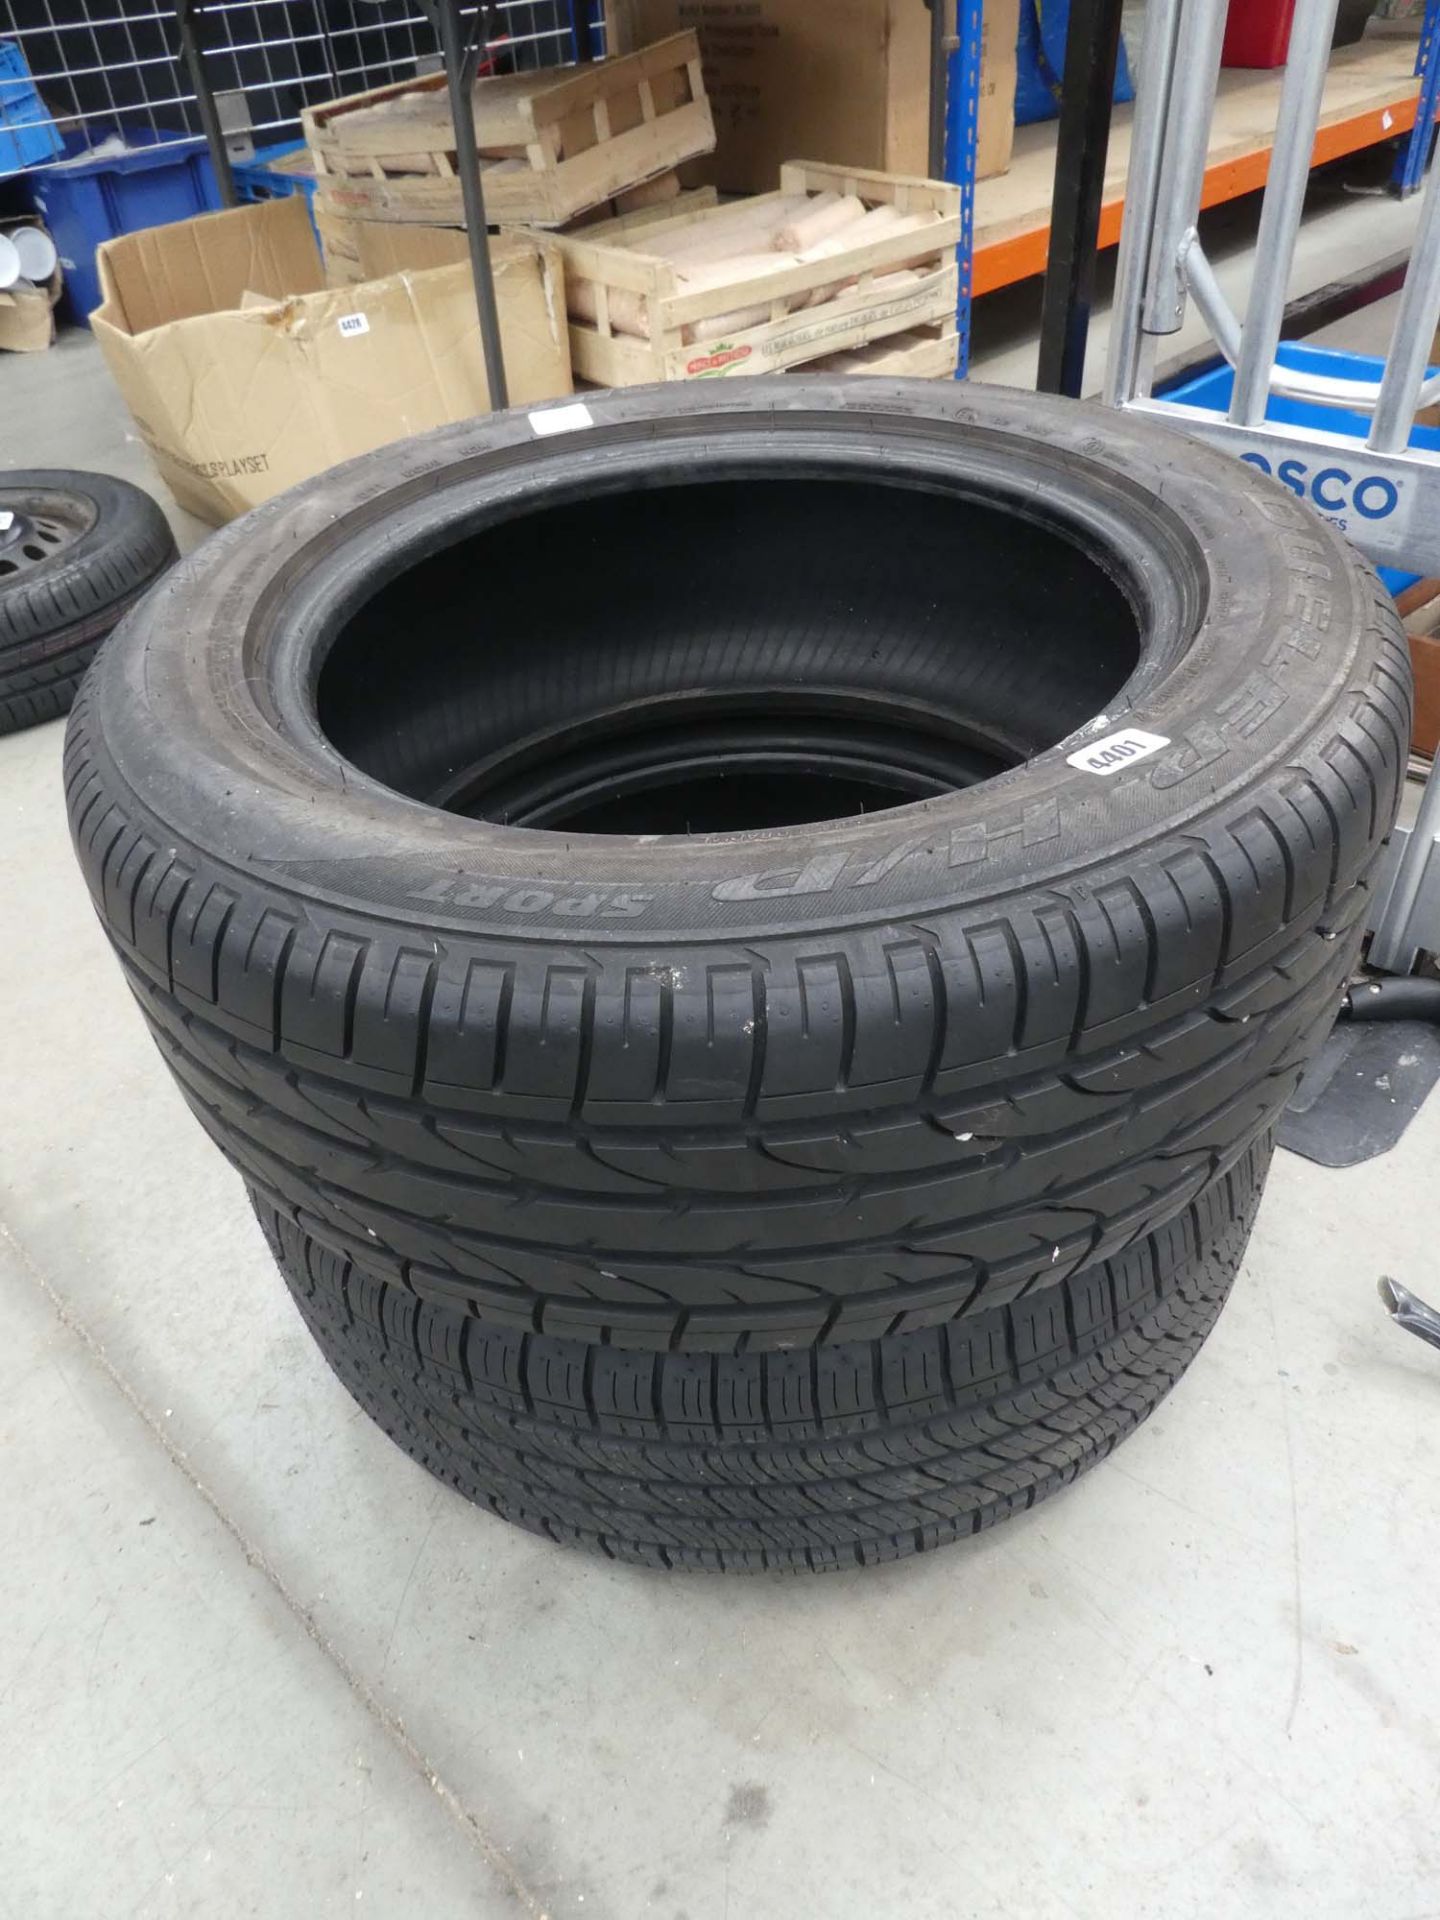 2 Bridgestone Dueller tyres size 235/55/17